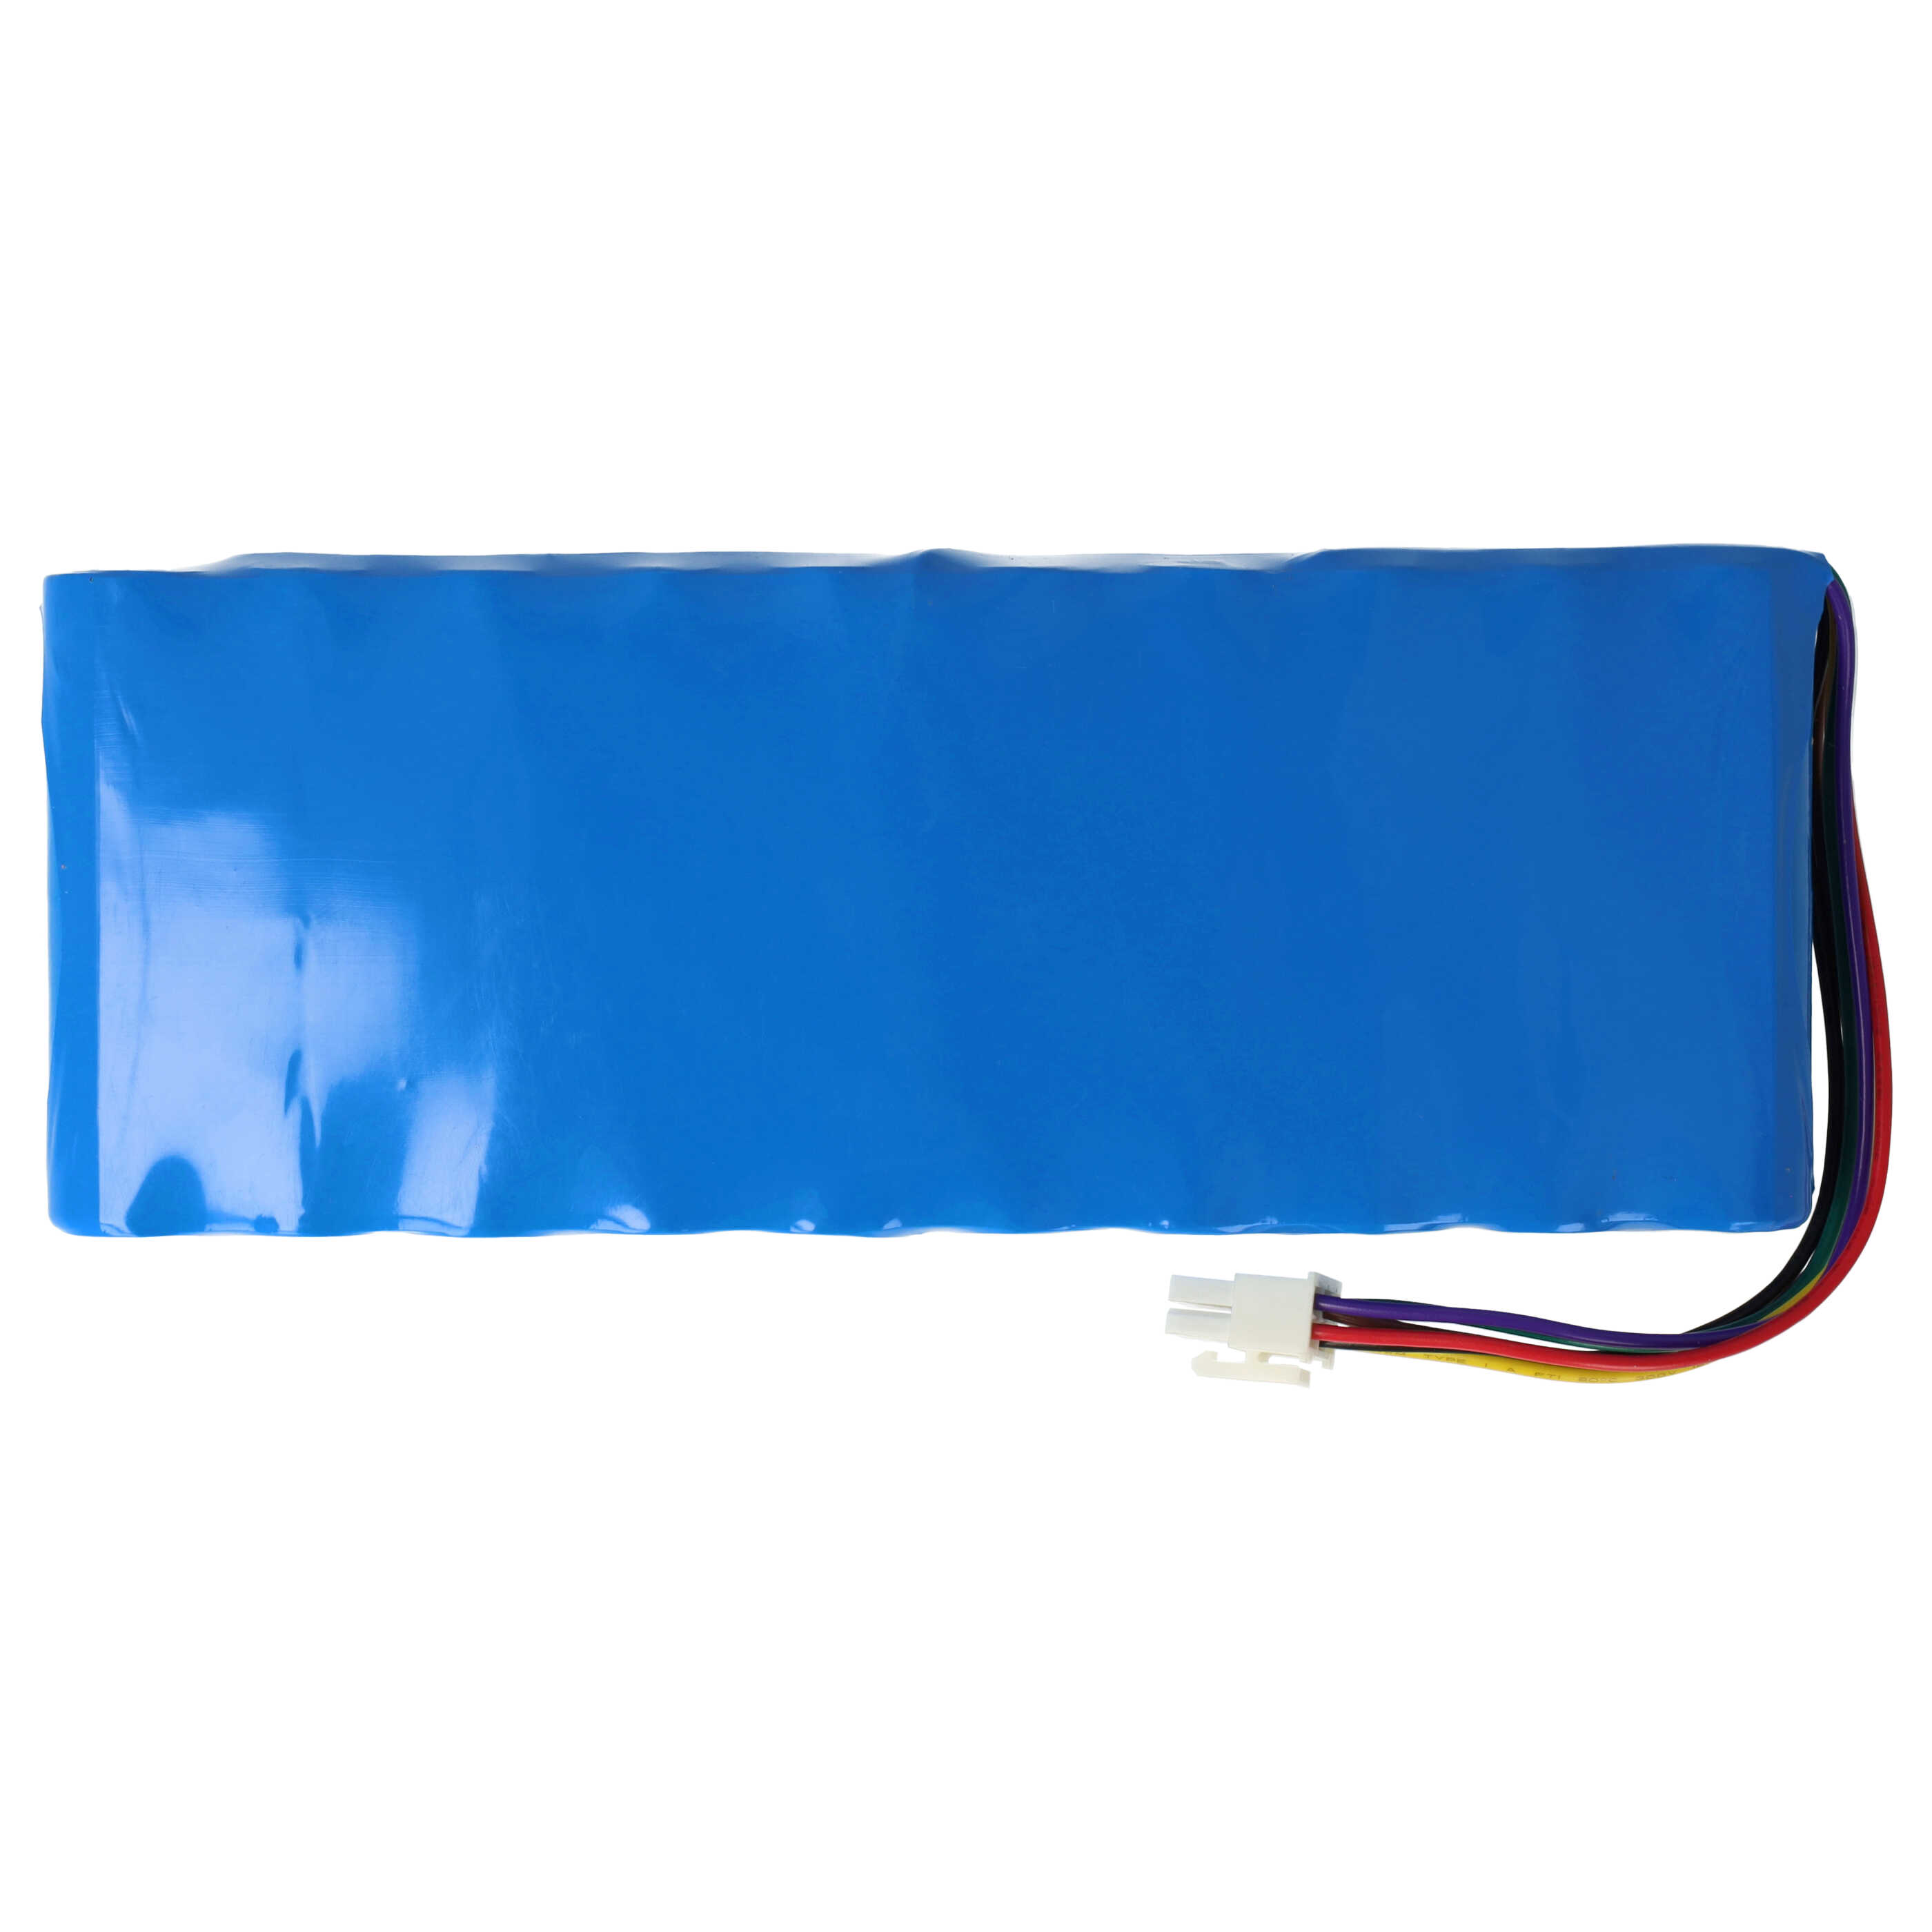 Lawnmower Battery Replacement for Husqvarna 535063601, 535 06 36-01, 5350636-01 - 6000mAh 12V NiMH, blue